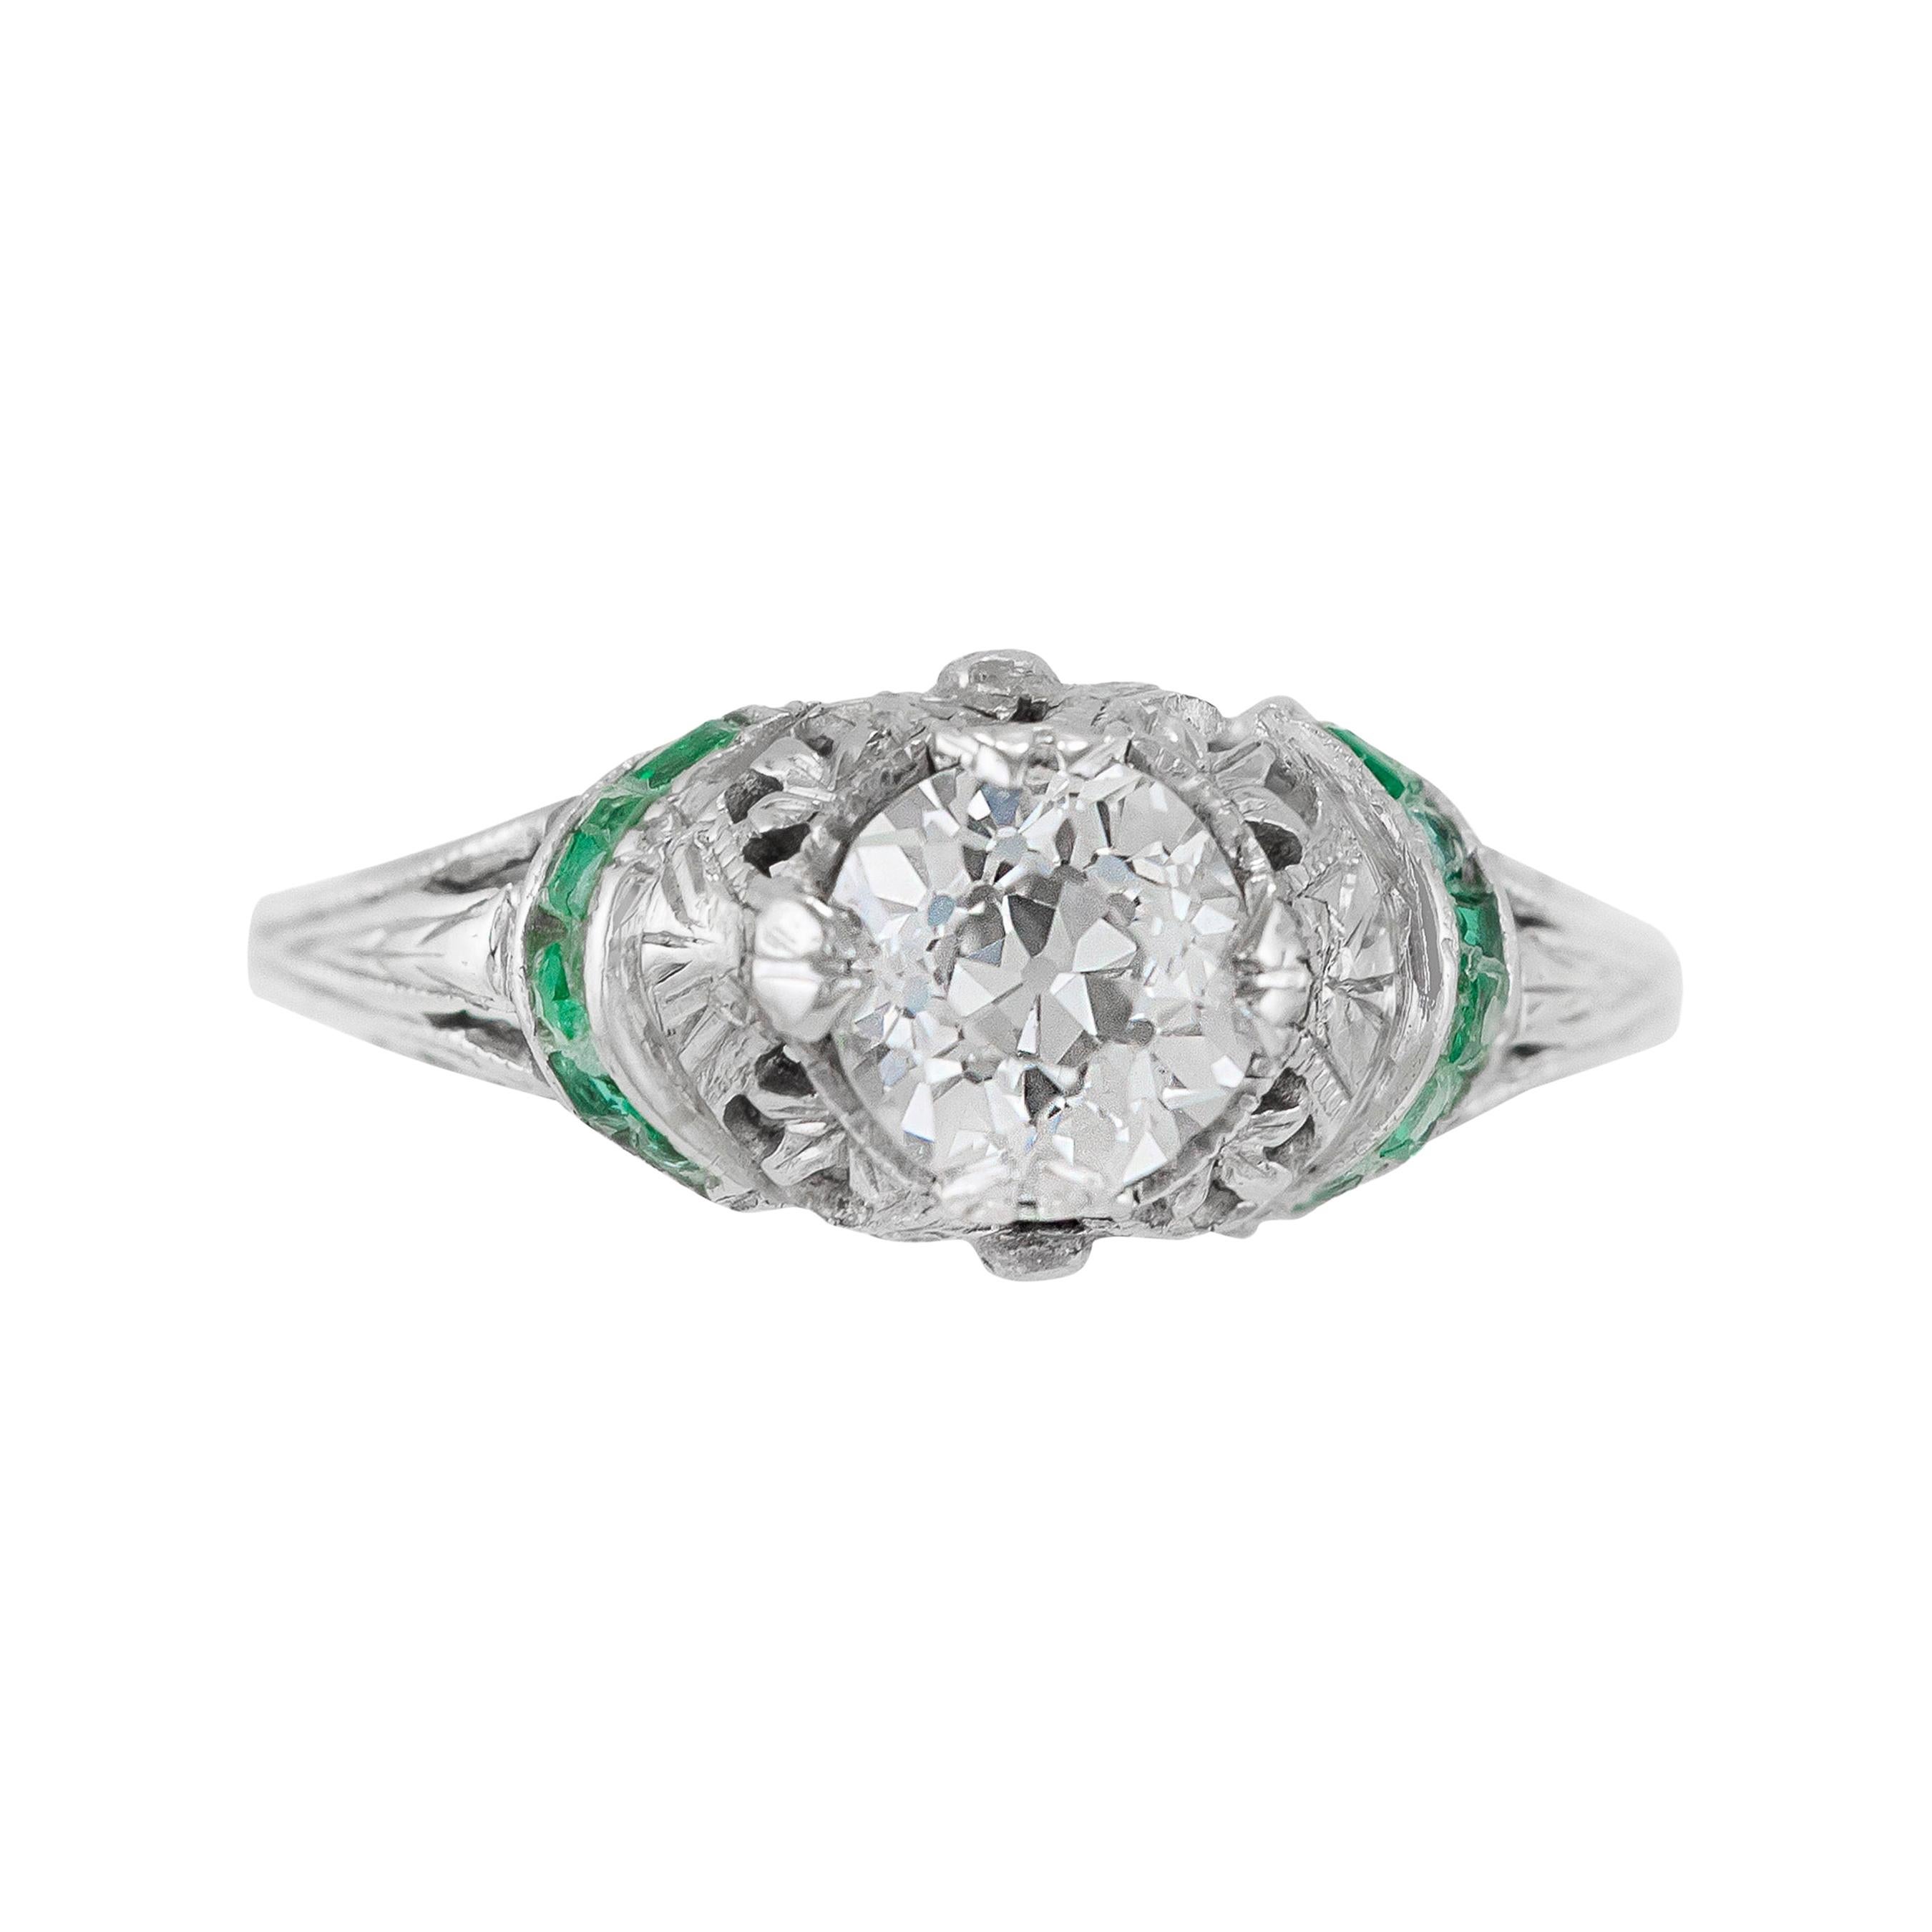 1.03 Carat Diamond Engagement Ring with Emeralds